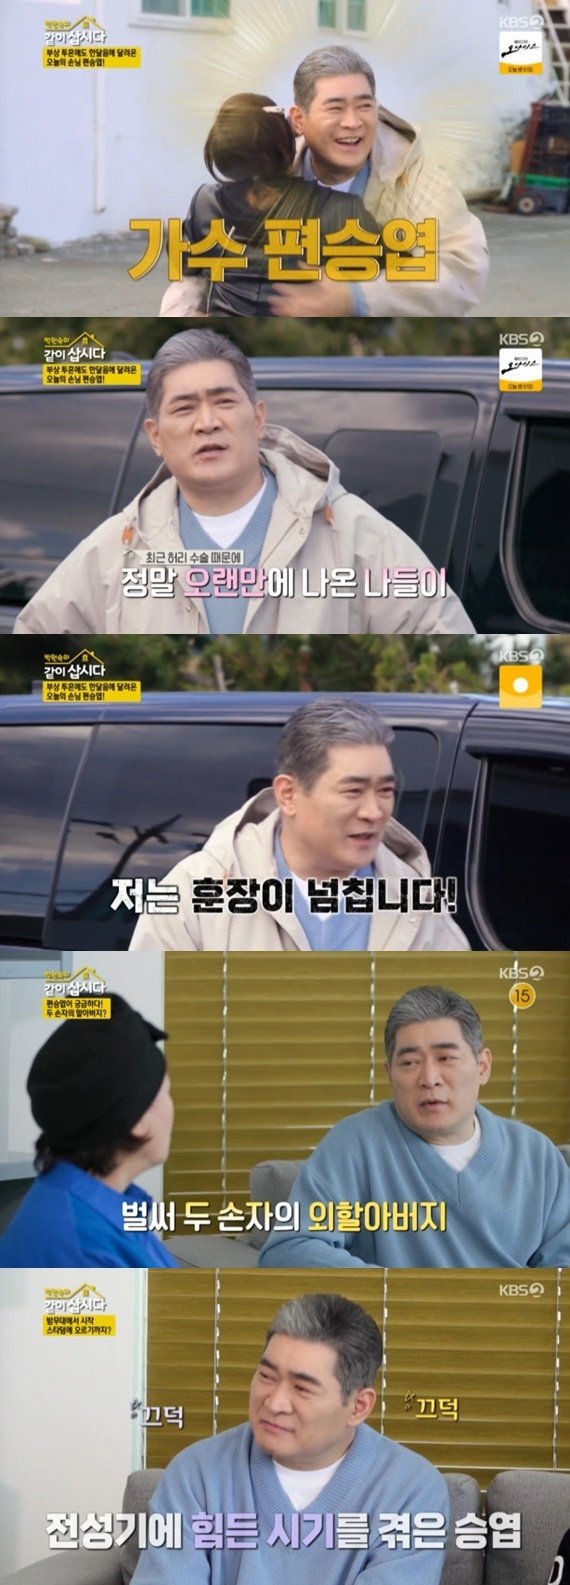 KBS 2TV '박원숙의 같이 삽시다 시즌3' 캡삽시다